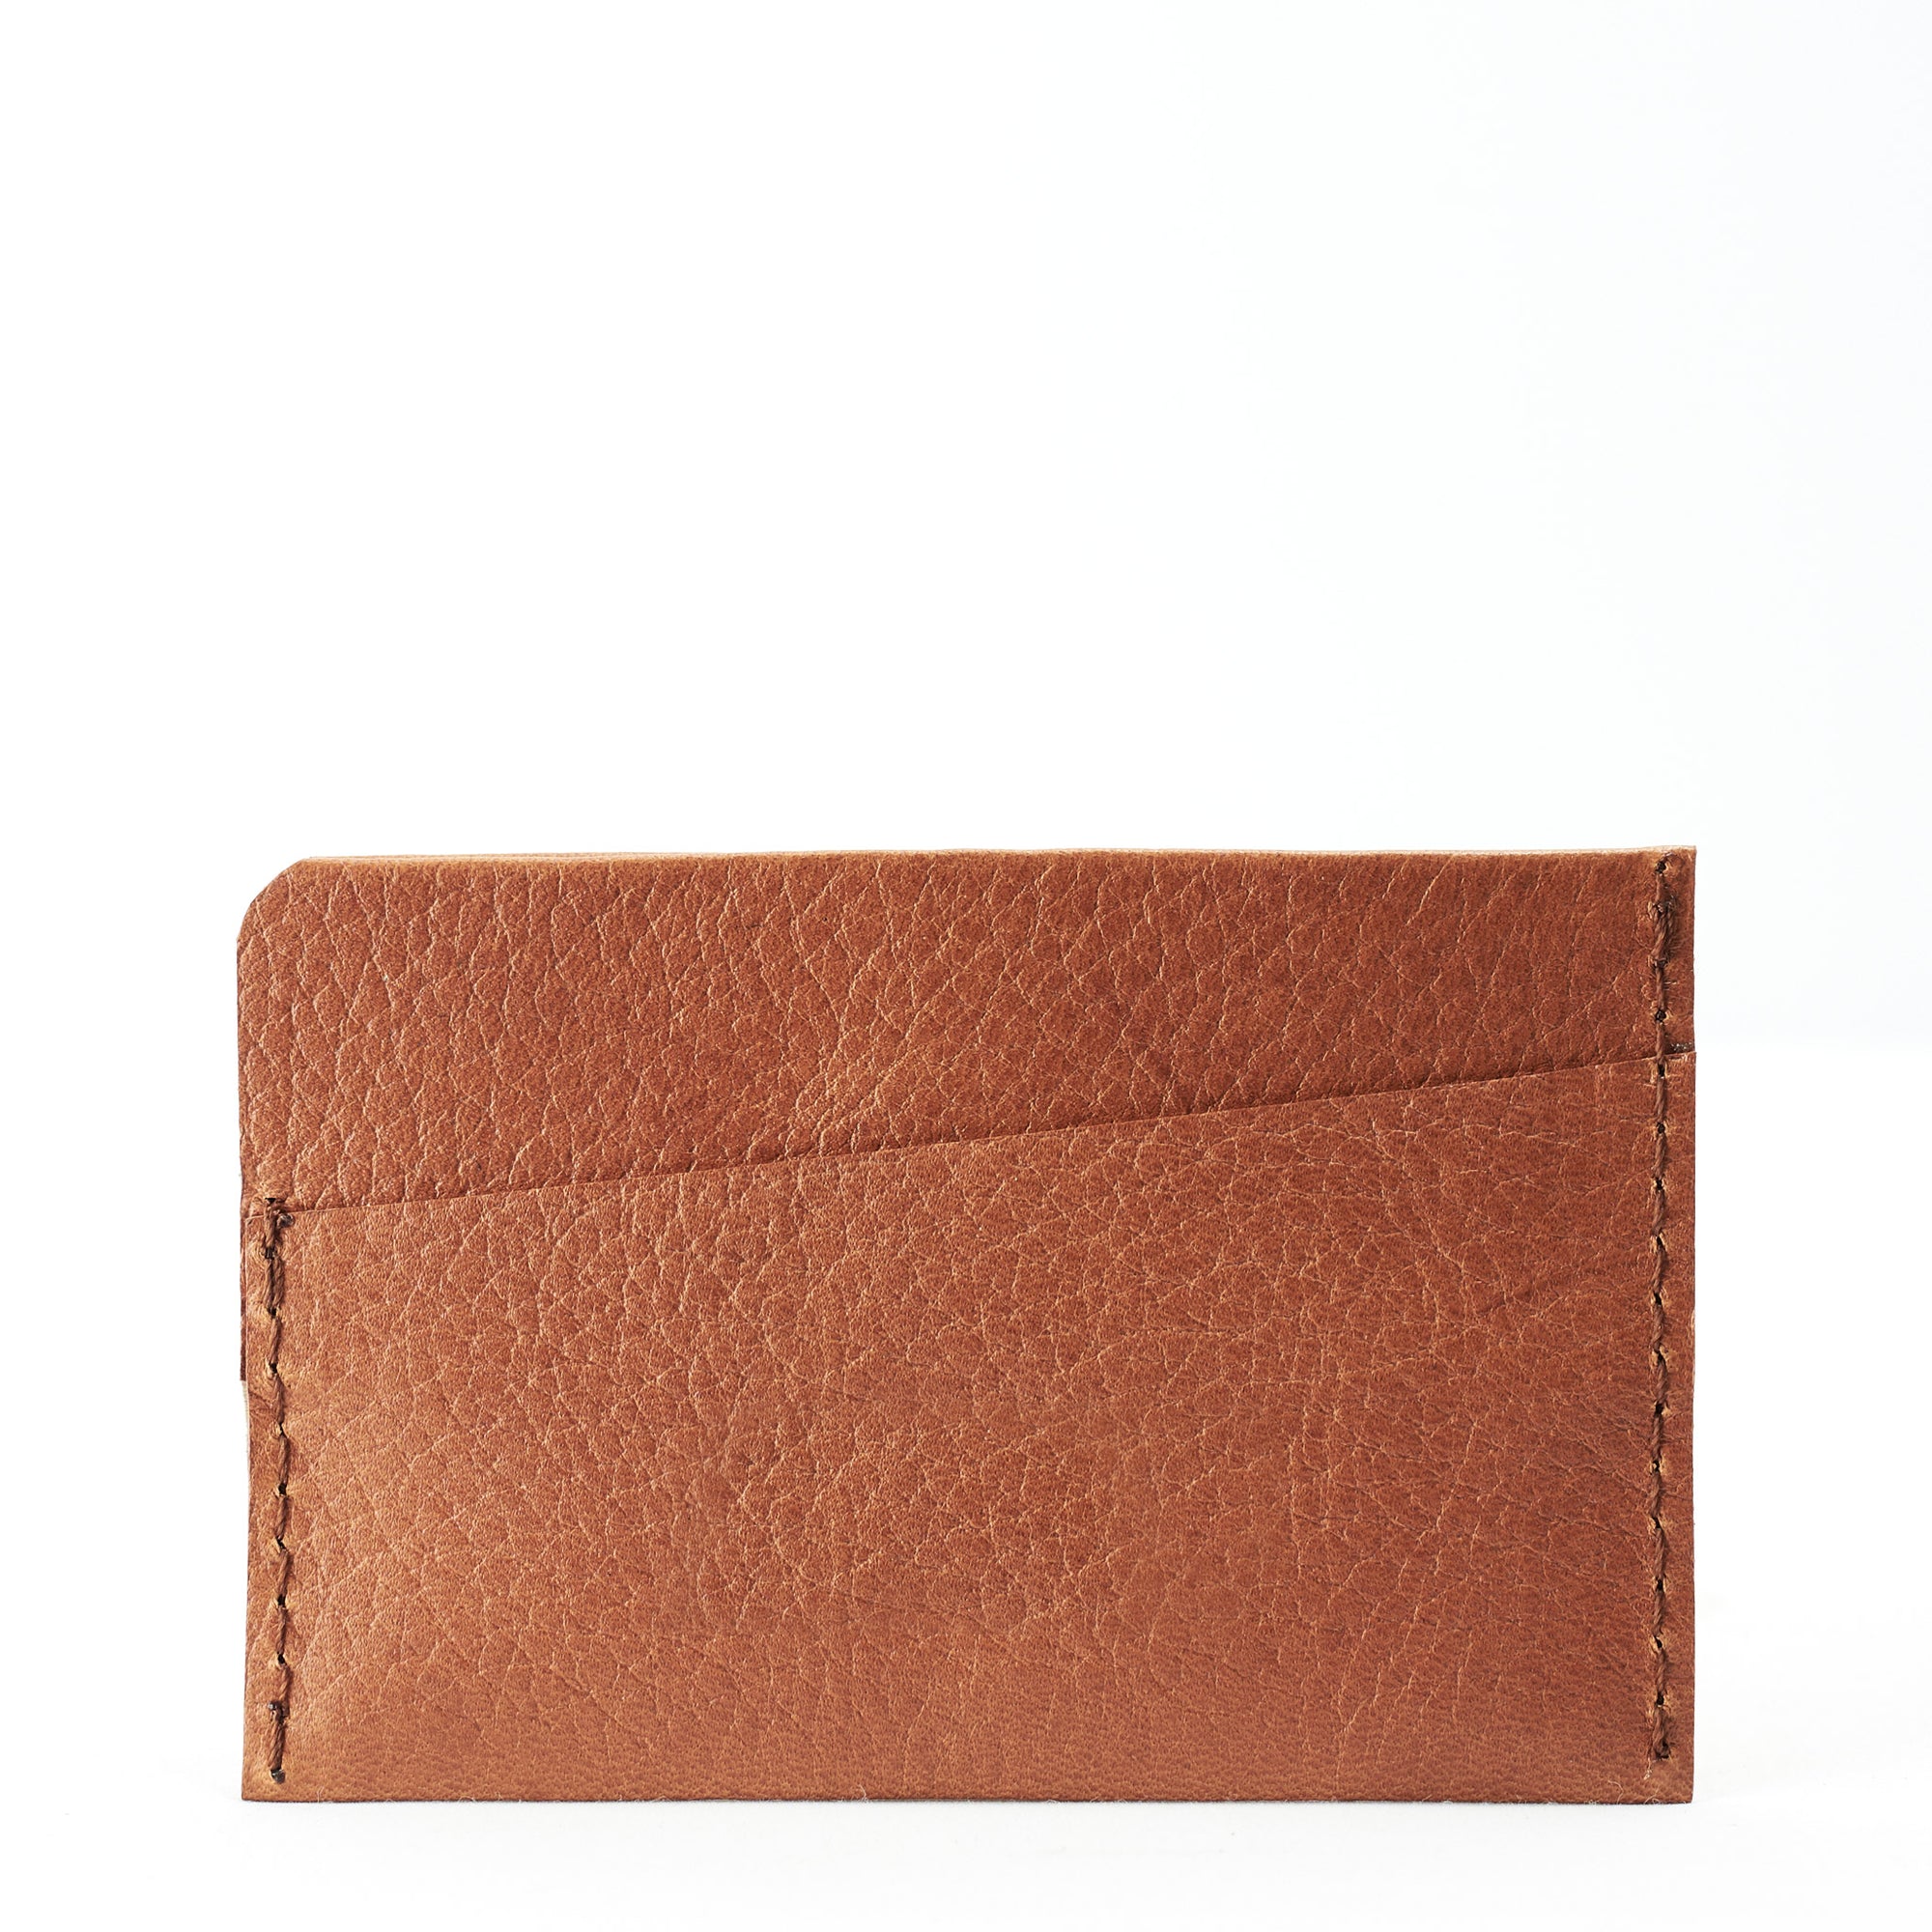 Back. Slim brown leather card holder. Gifts for men, leather tan card holder, handmade accessories, minimalist designer cards wallet